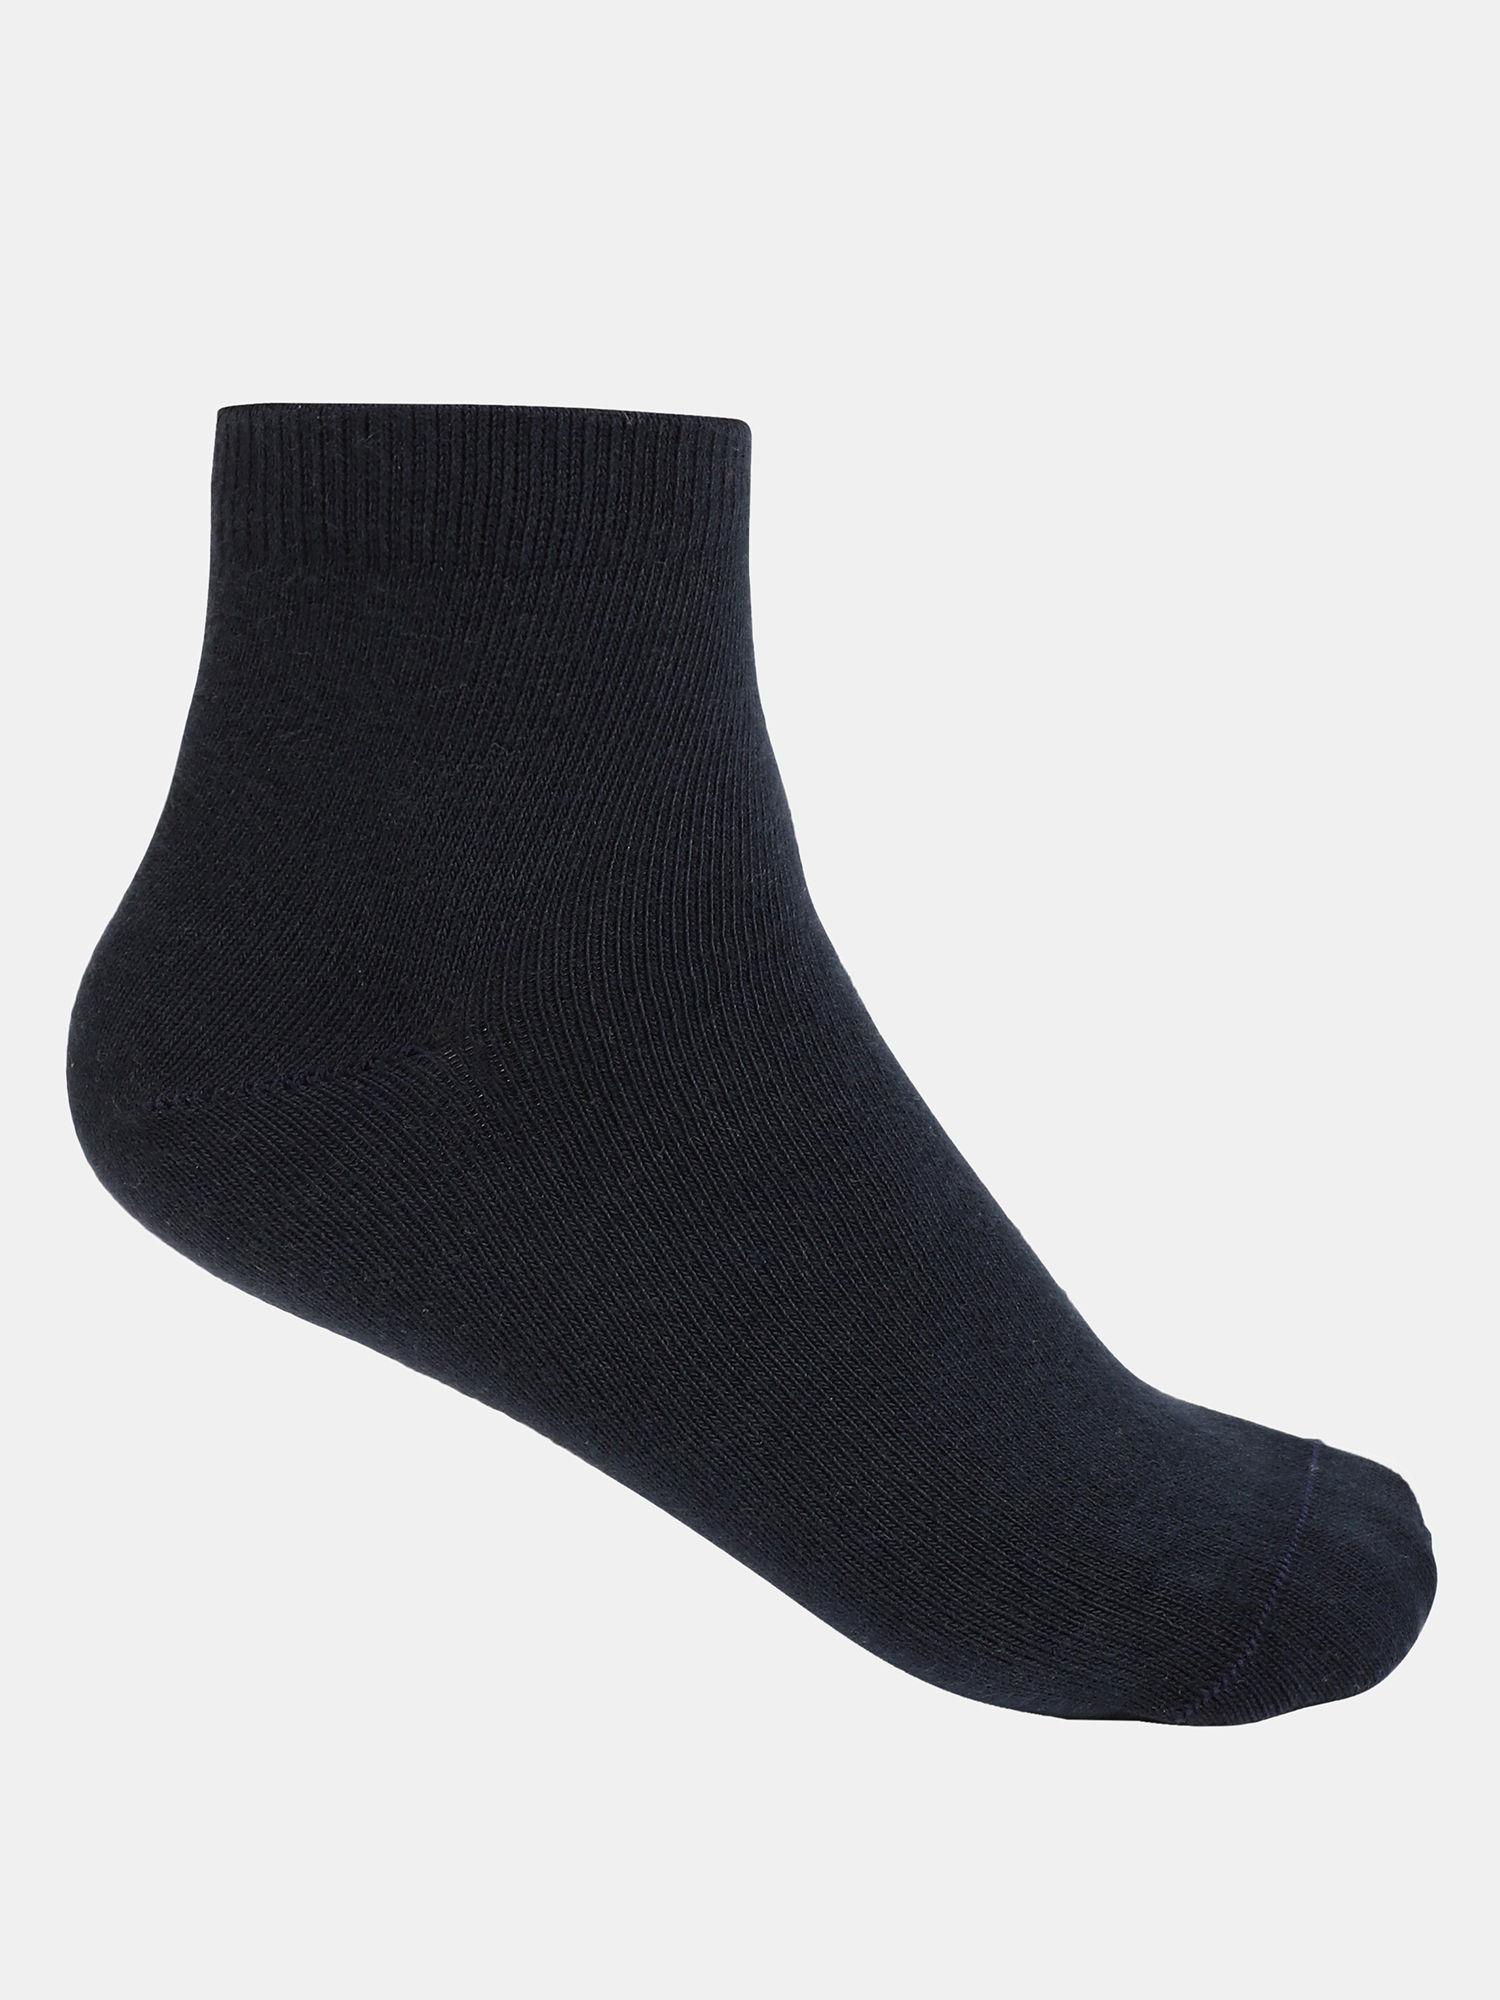 7801-unisex-cotton-nylon-stretch-ankle-length-socks---navy